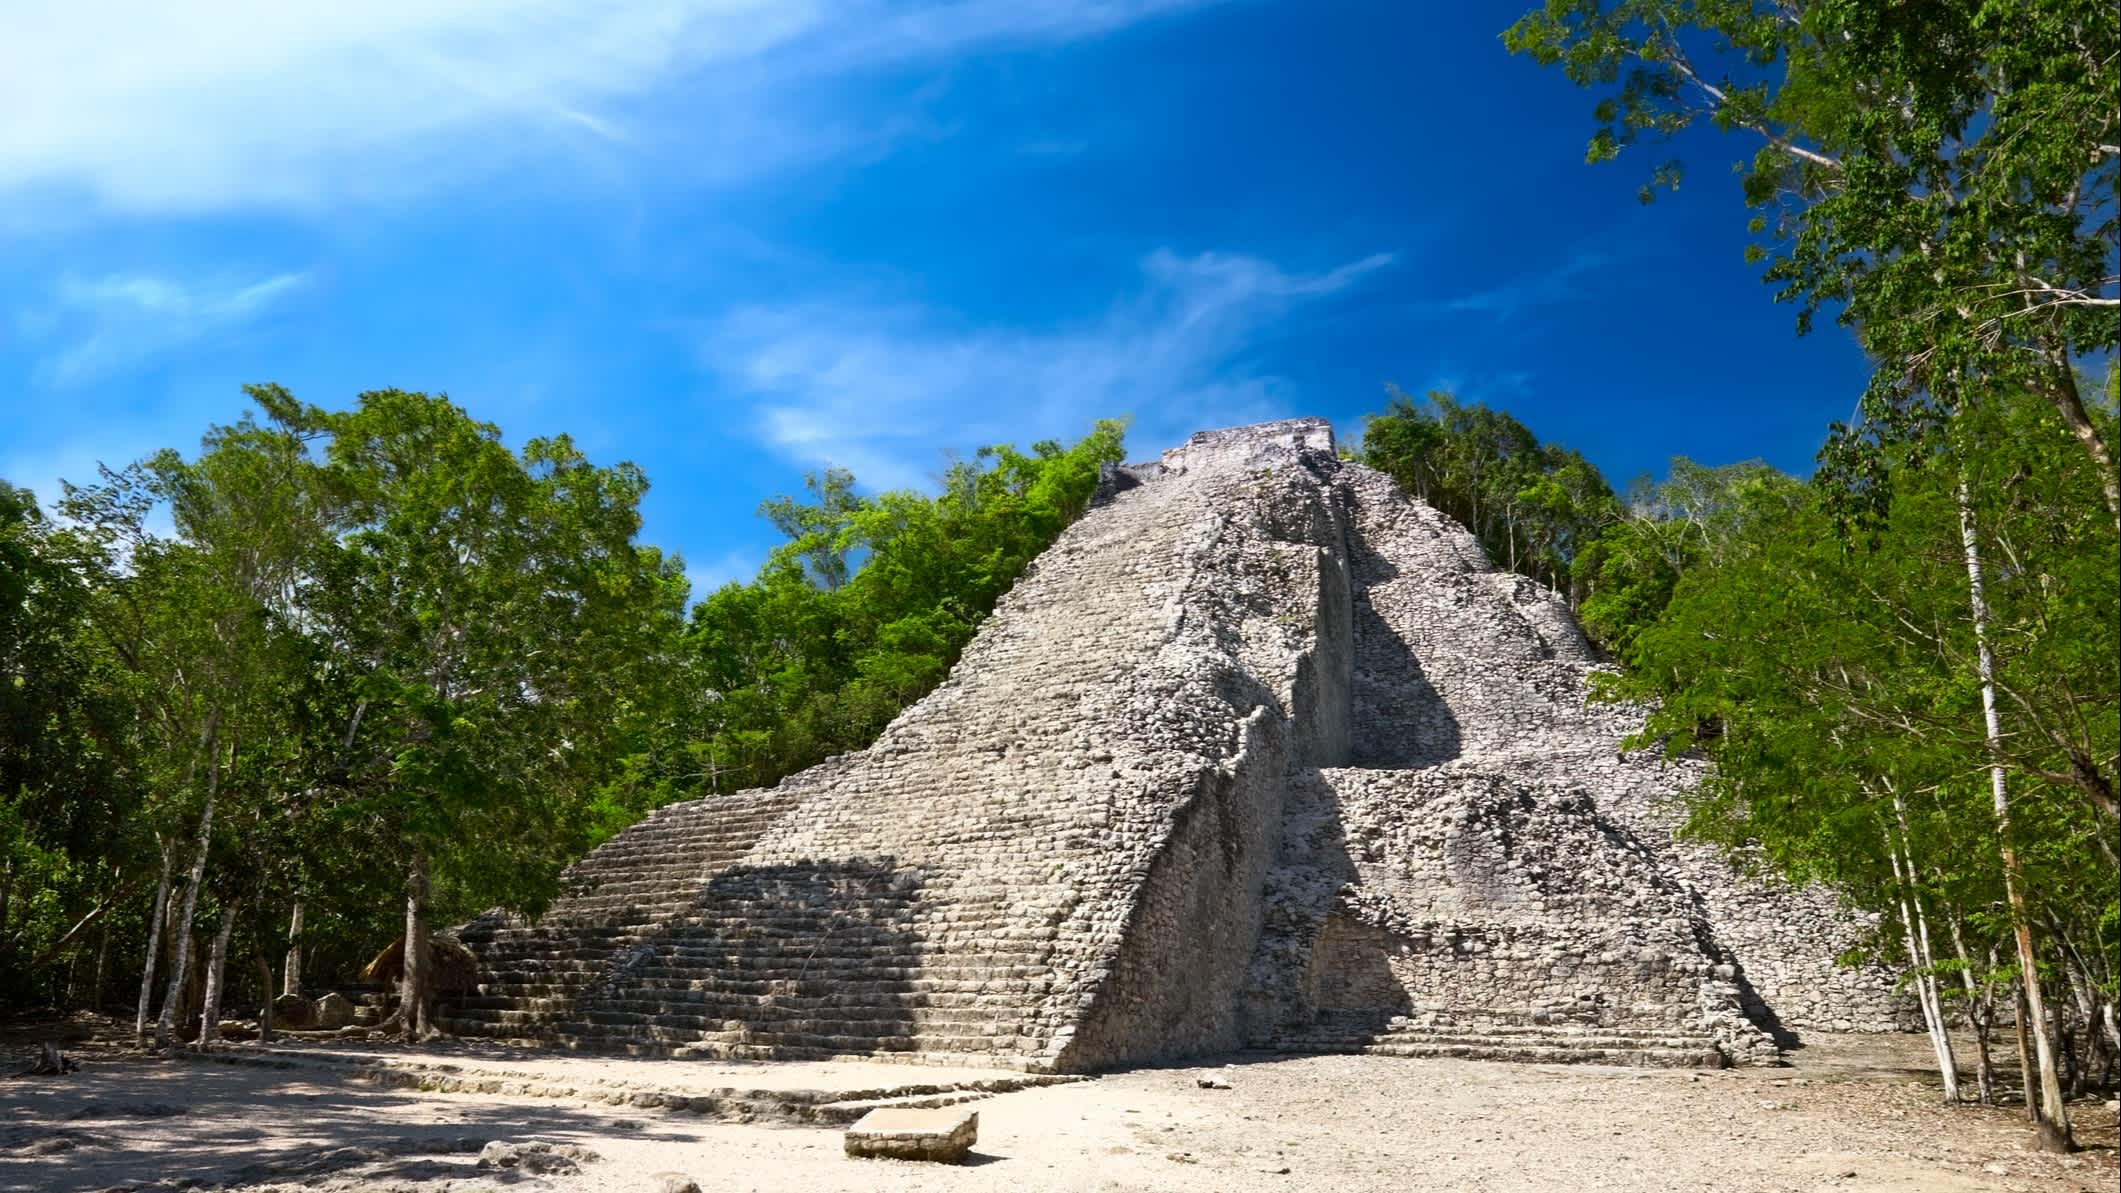 Blick zum Nohoch Mul Maya Pyramide in Coba, Yucatan, Mexiko.

